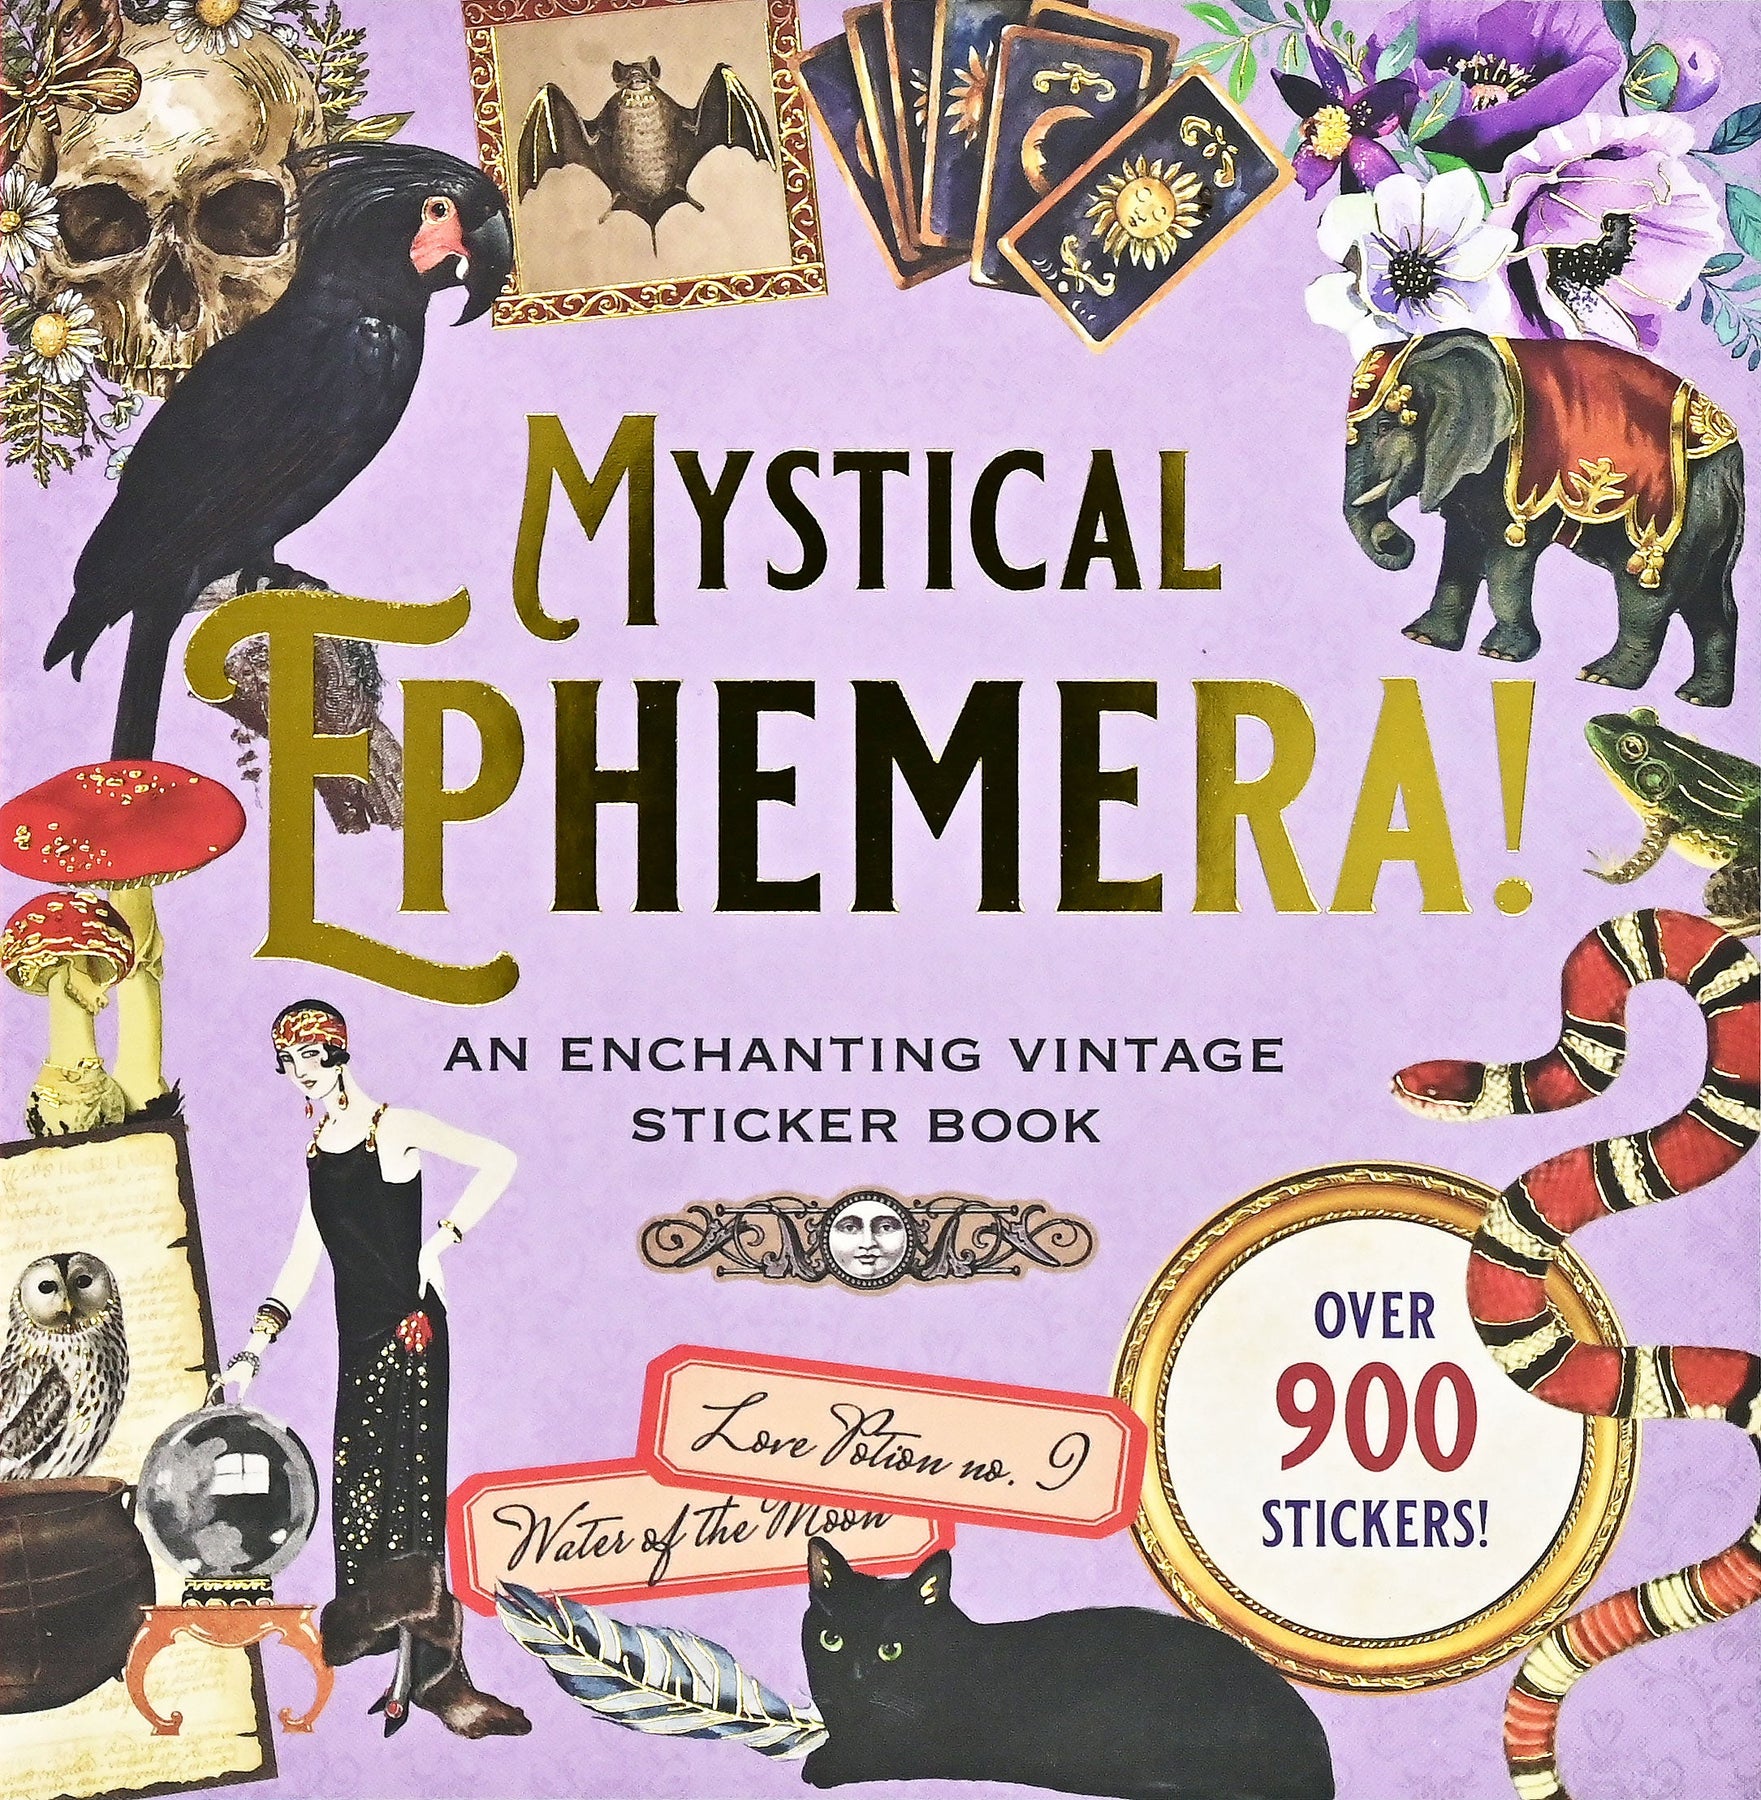 MYSTICAL EPHEMERA STICKER BOOK. [Book]